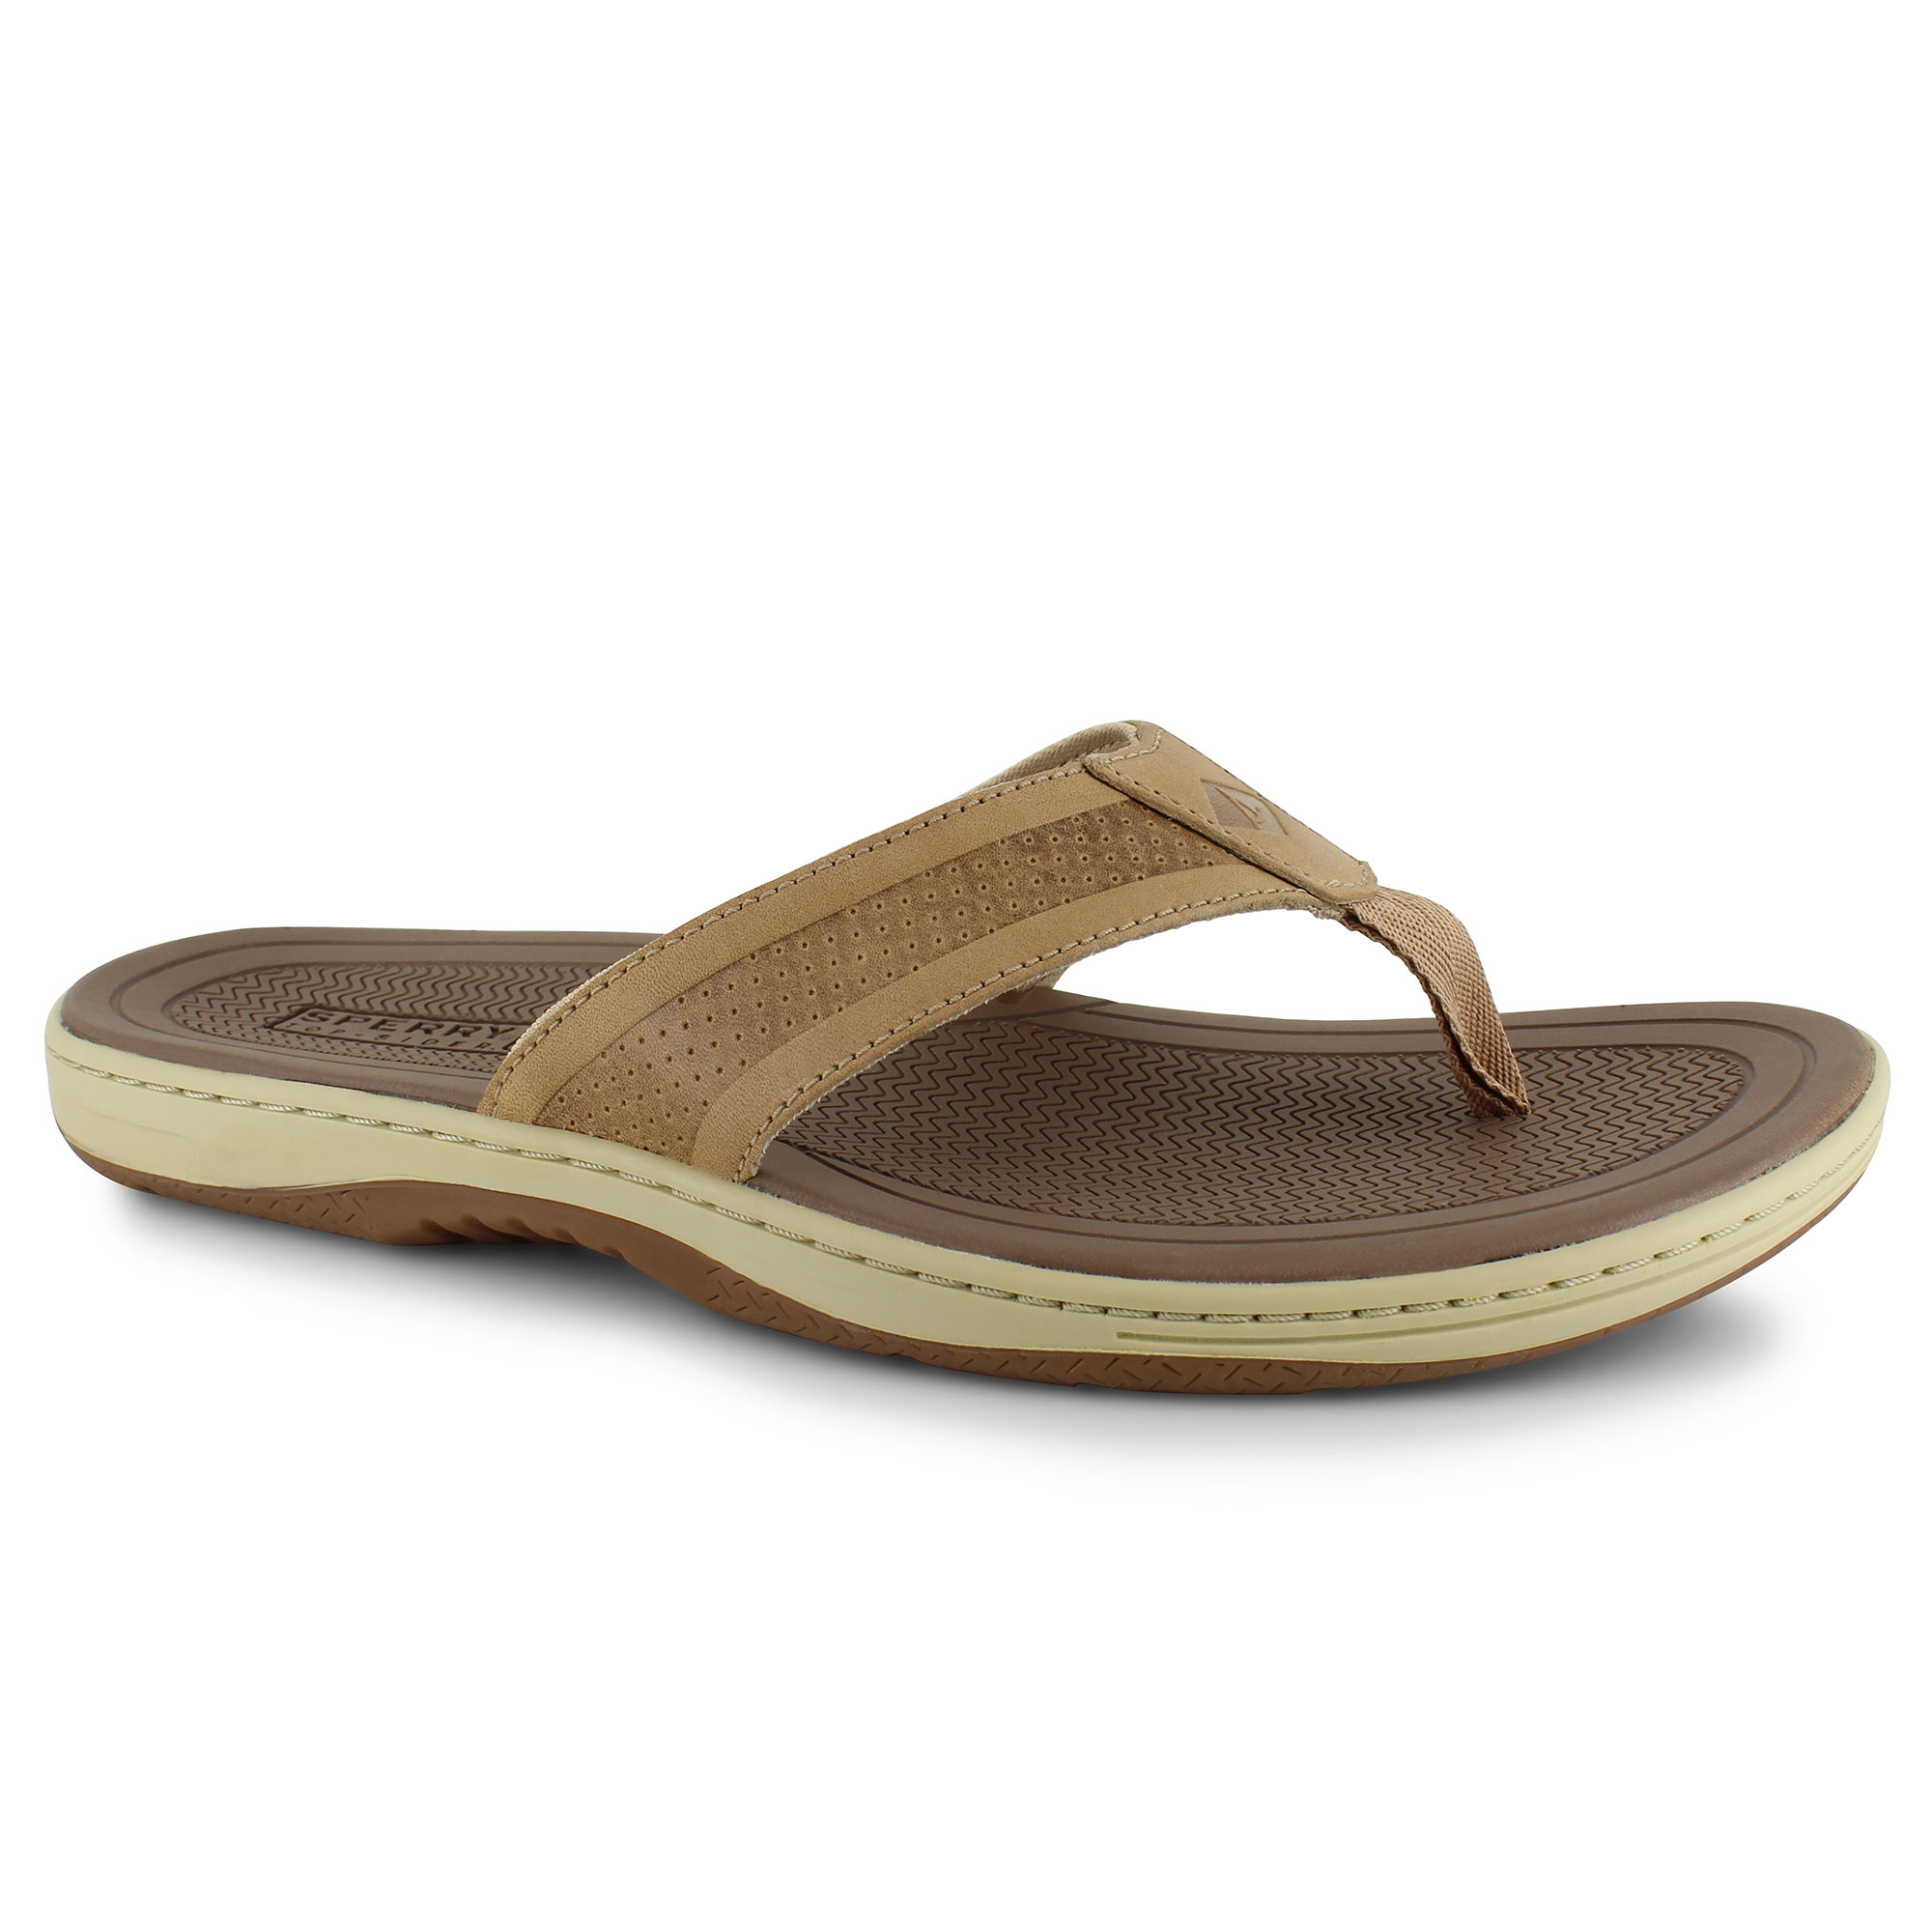 NEW Mens Sperry Top-Sider Havasu Burgee Brown Thong Sandals Flip Flops Size 7 8 